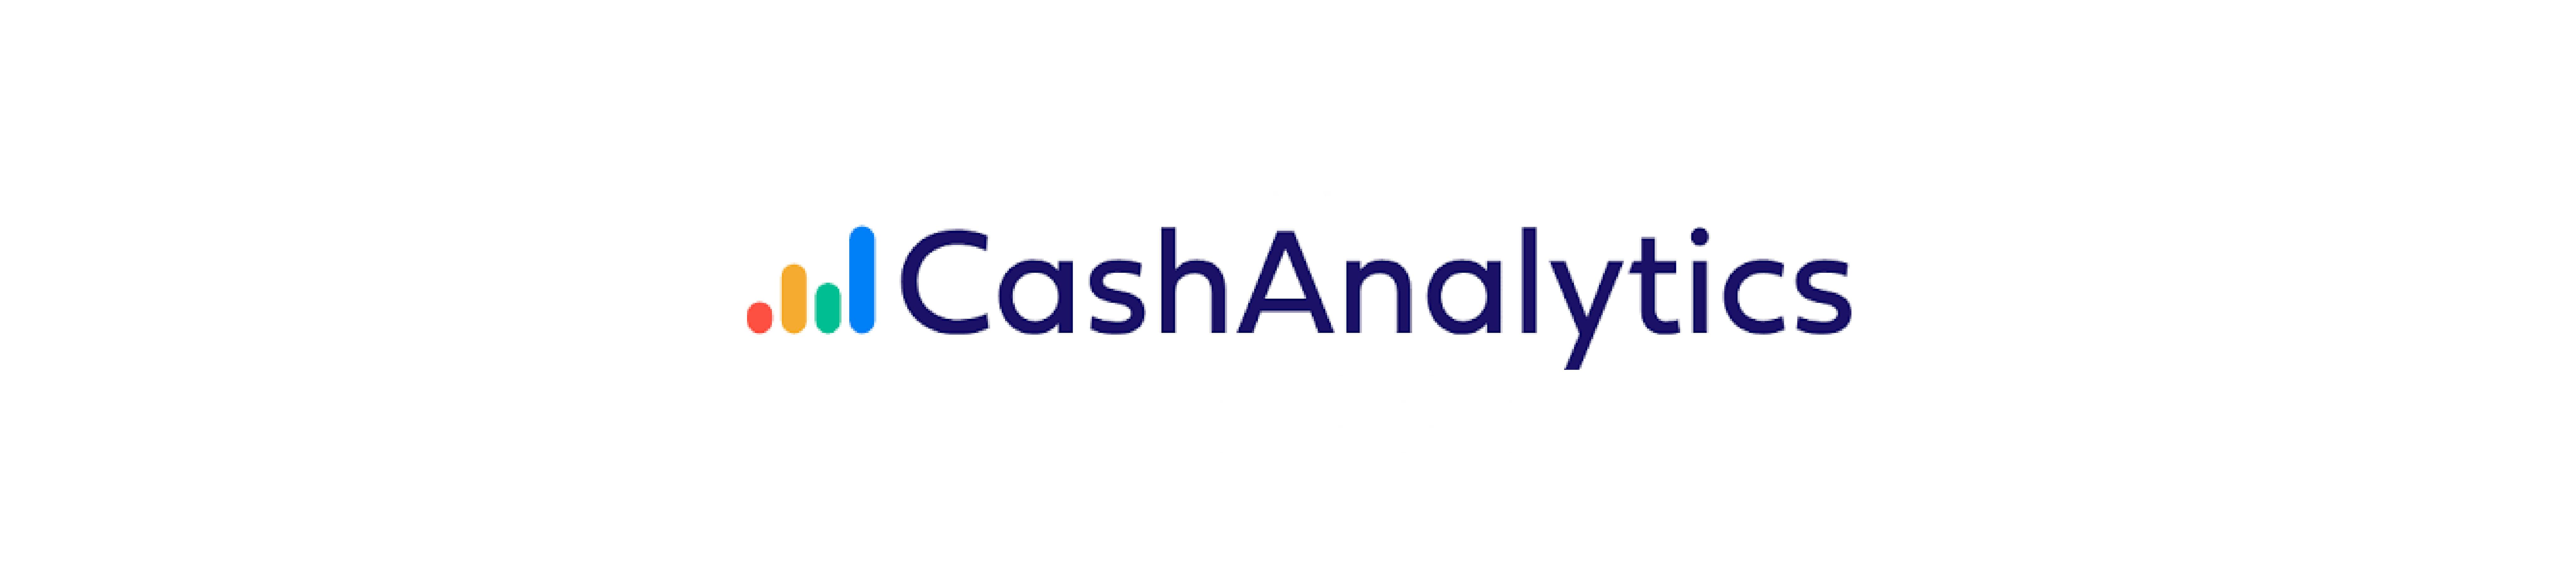 Cash Analytics logo